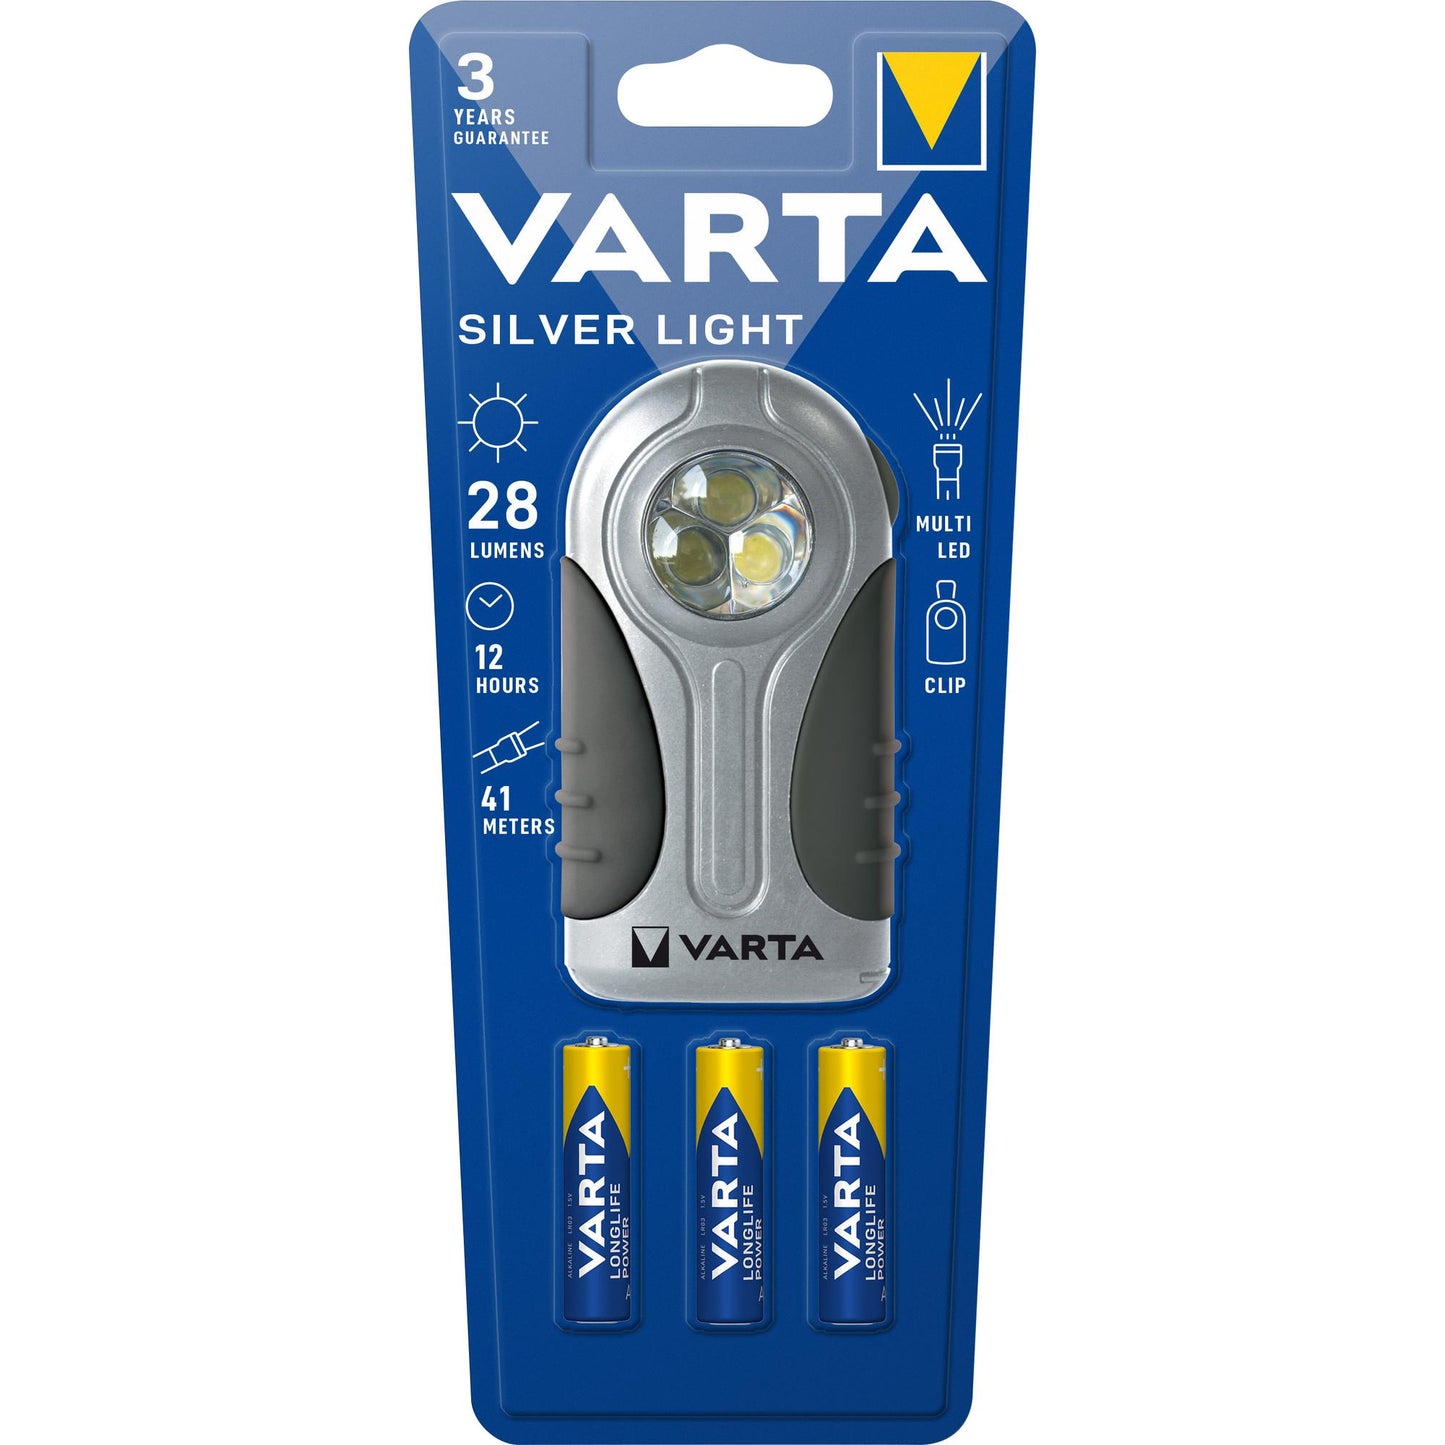 VARTA LED Taschenlampe Silver Light, 28lm inkl. 3x Batterie Alkaline AAA, Retail Blister